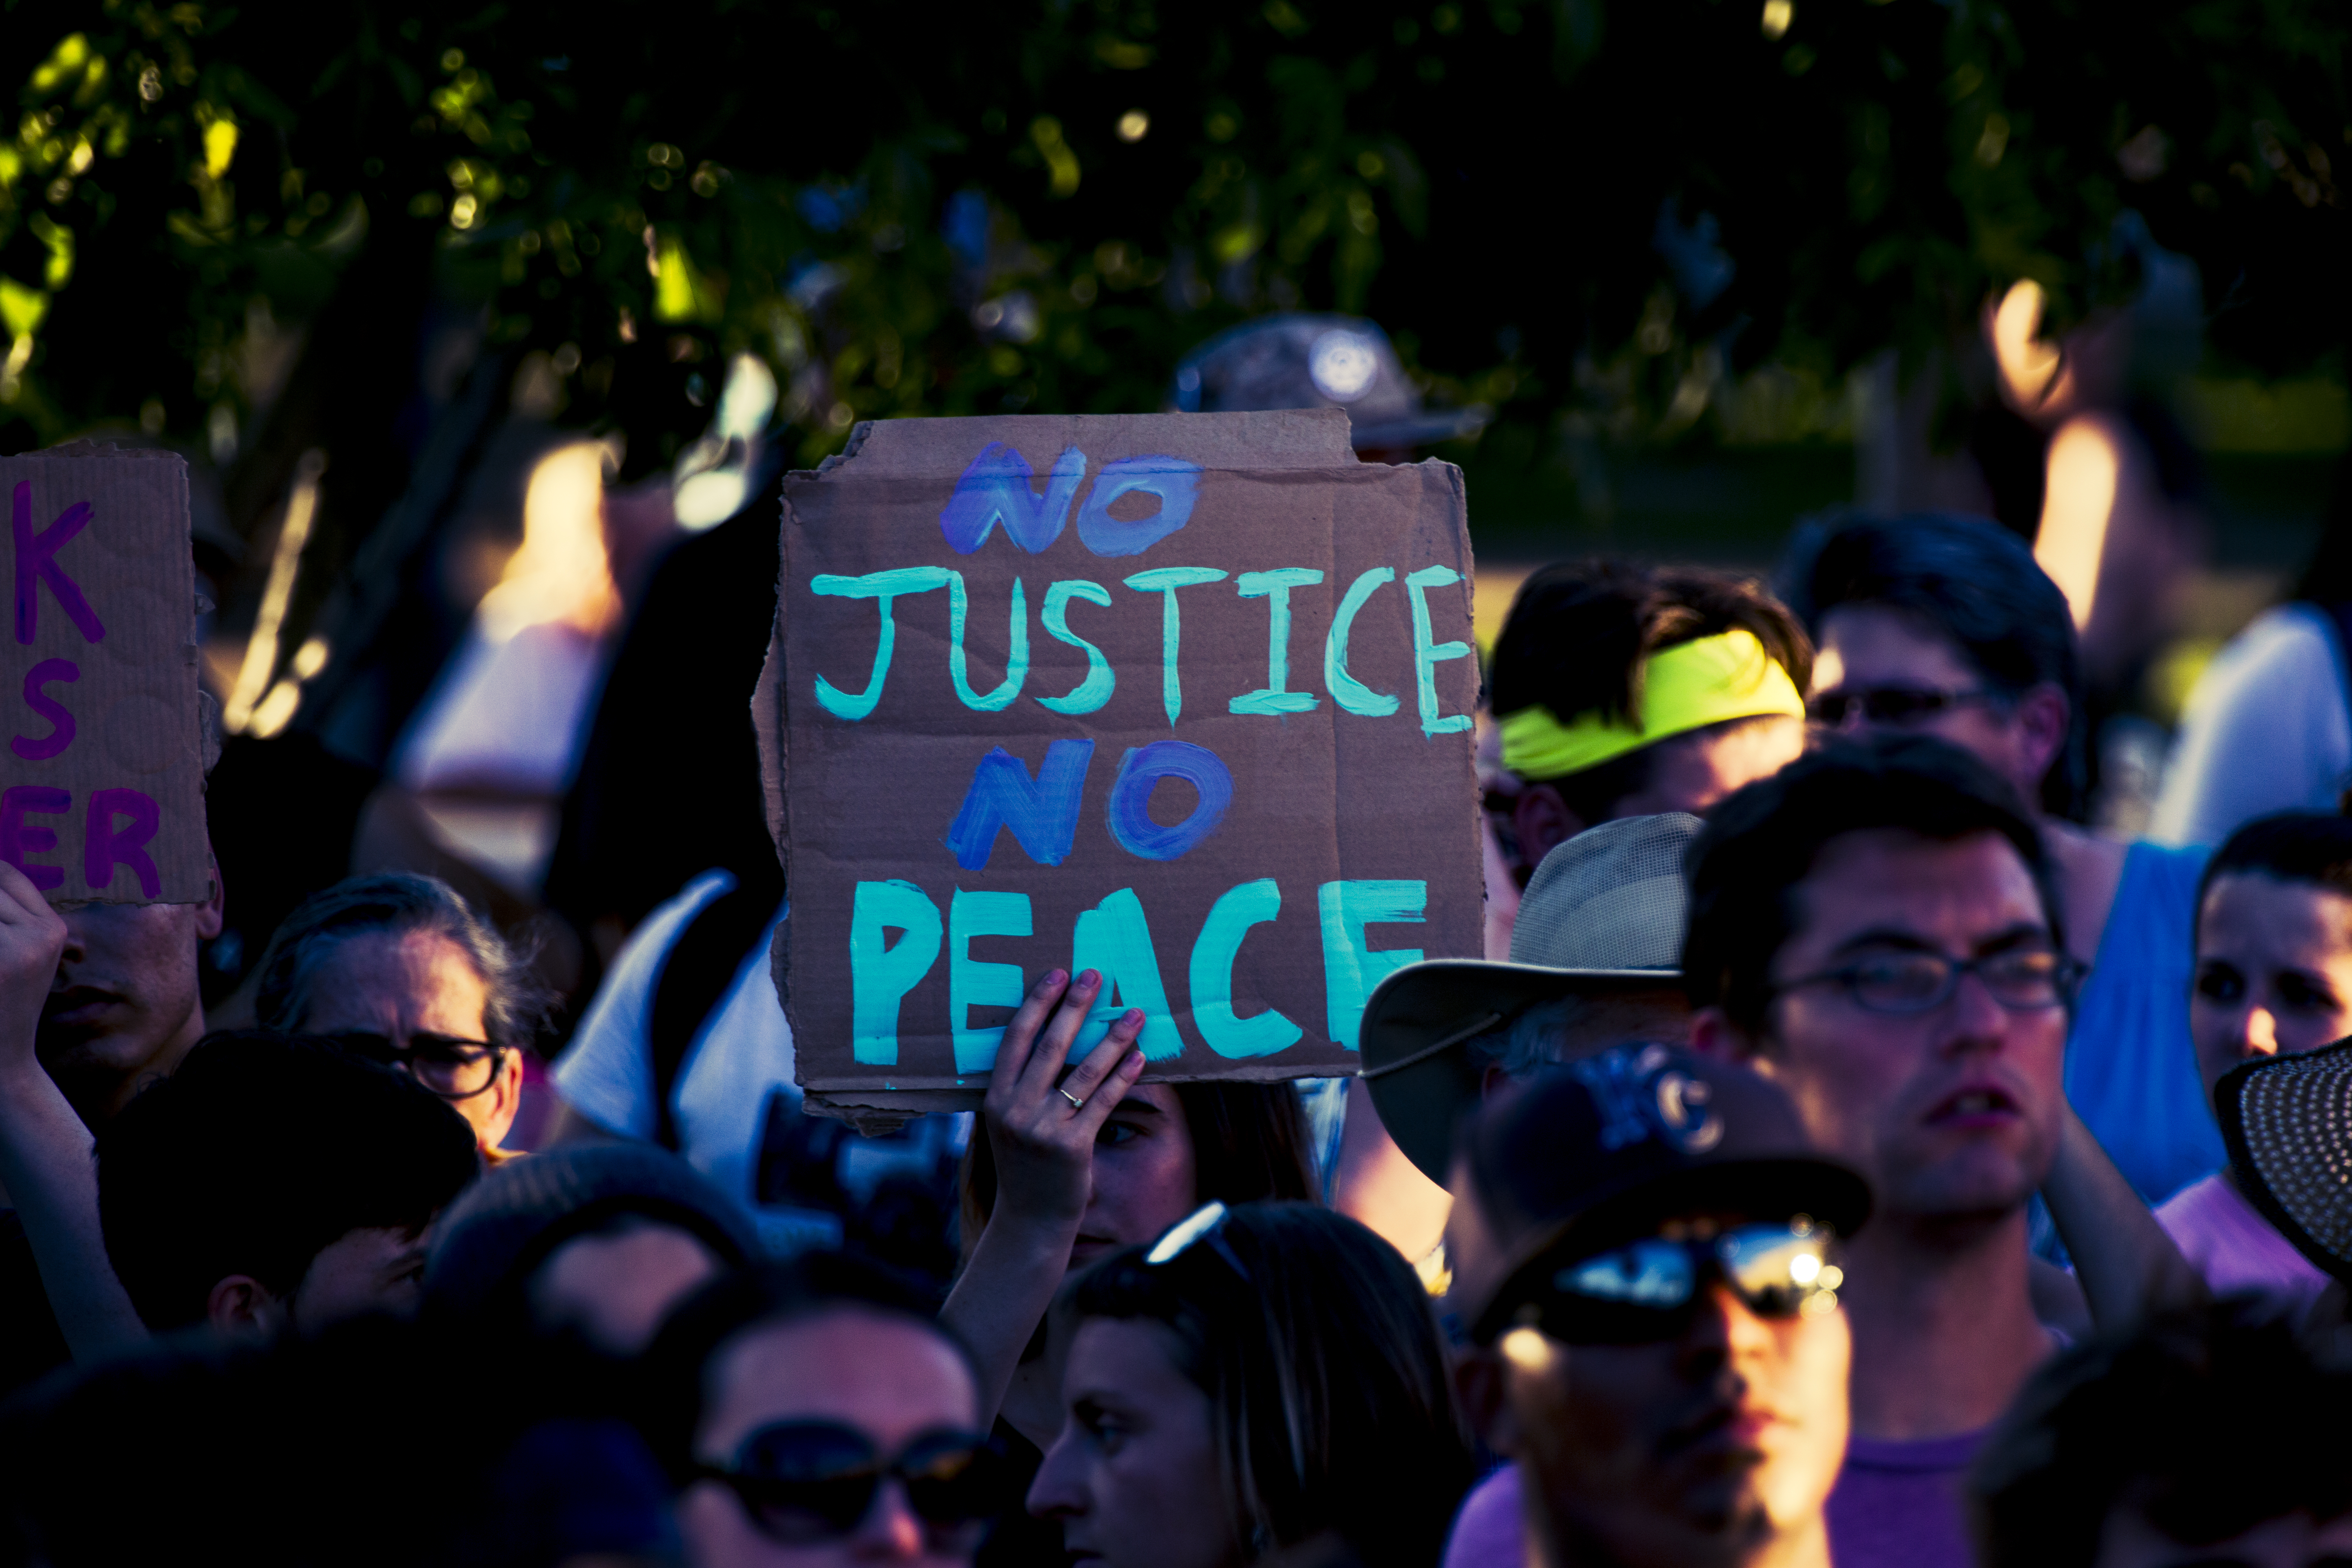 Protest Sign: No justice no peace